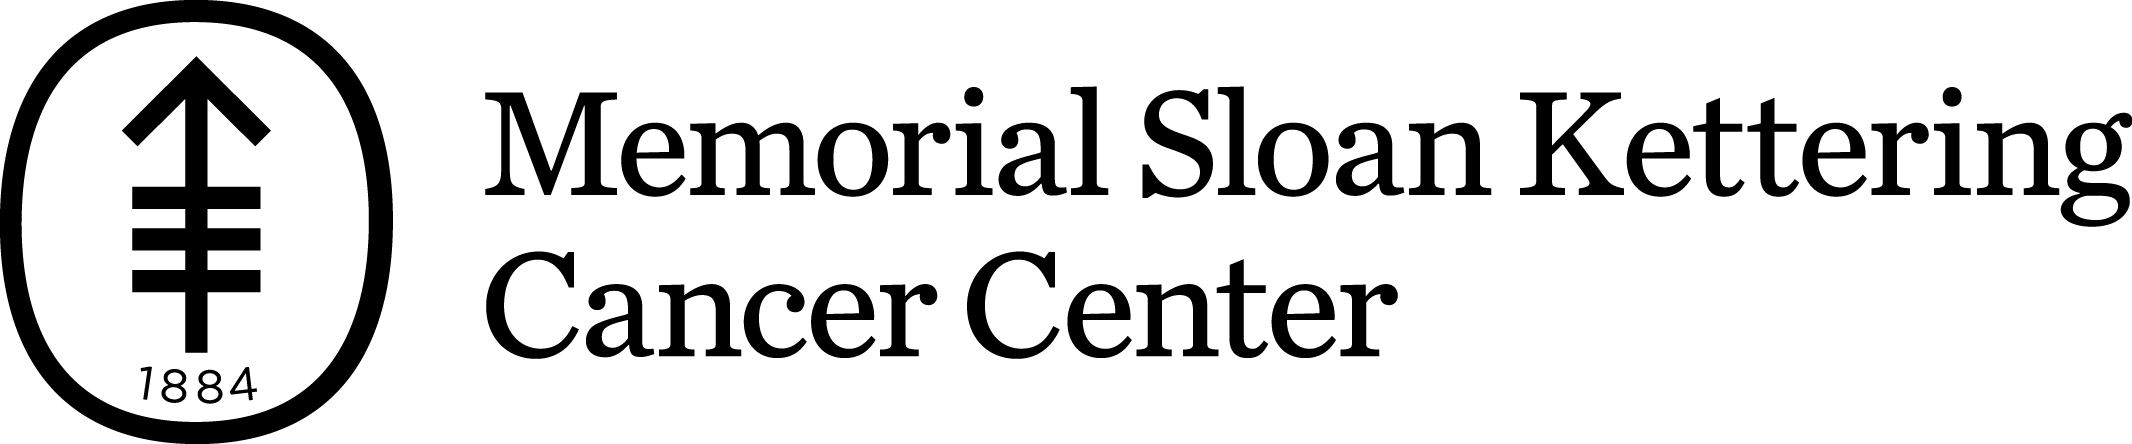 memorial sloan kettering cancer center logo